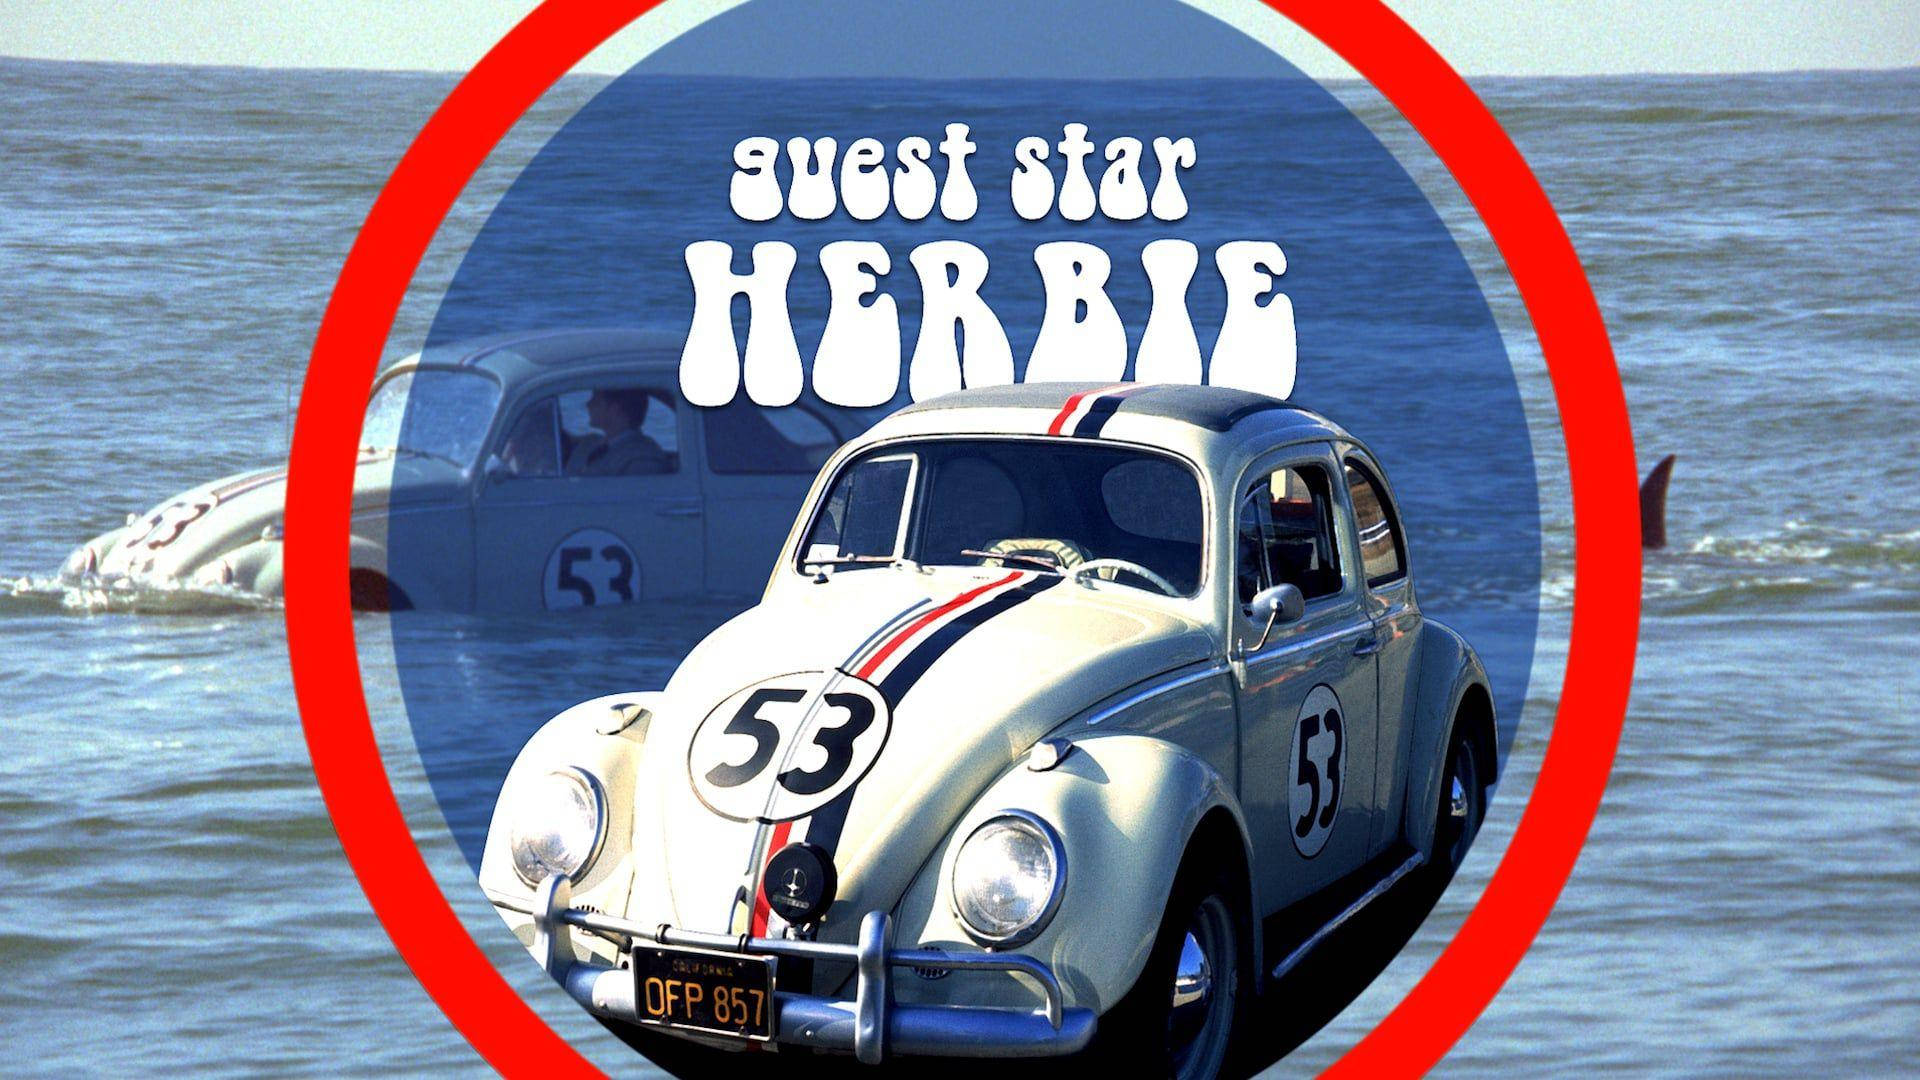 Herbie Fully Loaded Guest Star Wallpaper